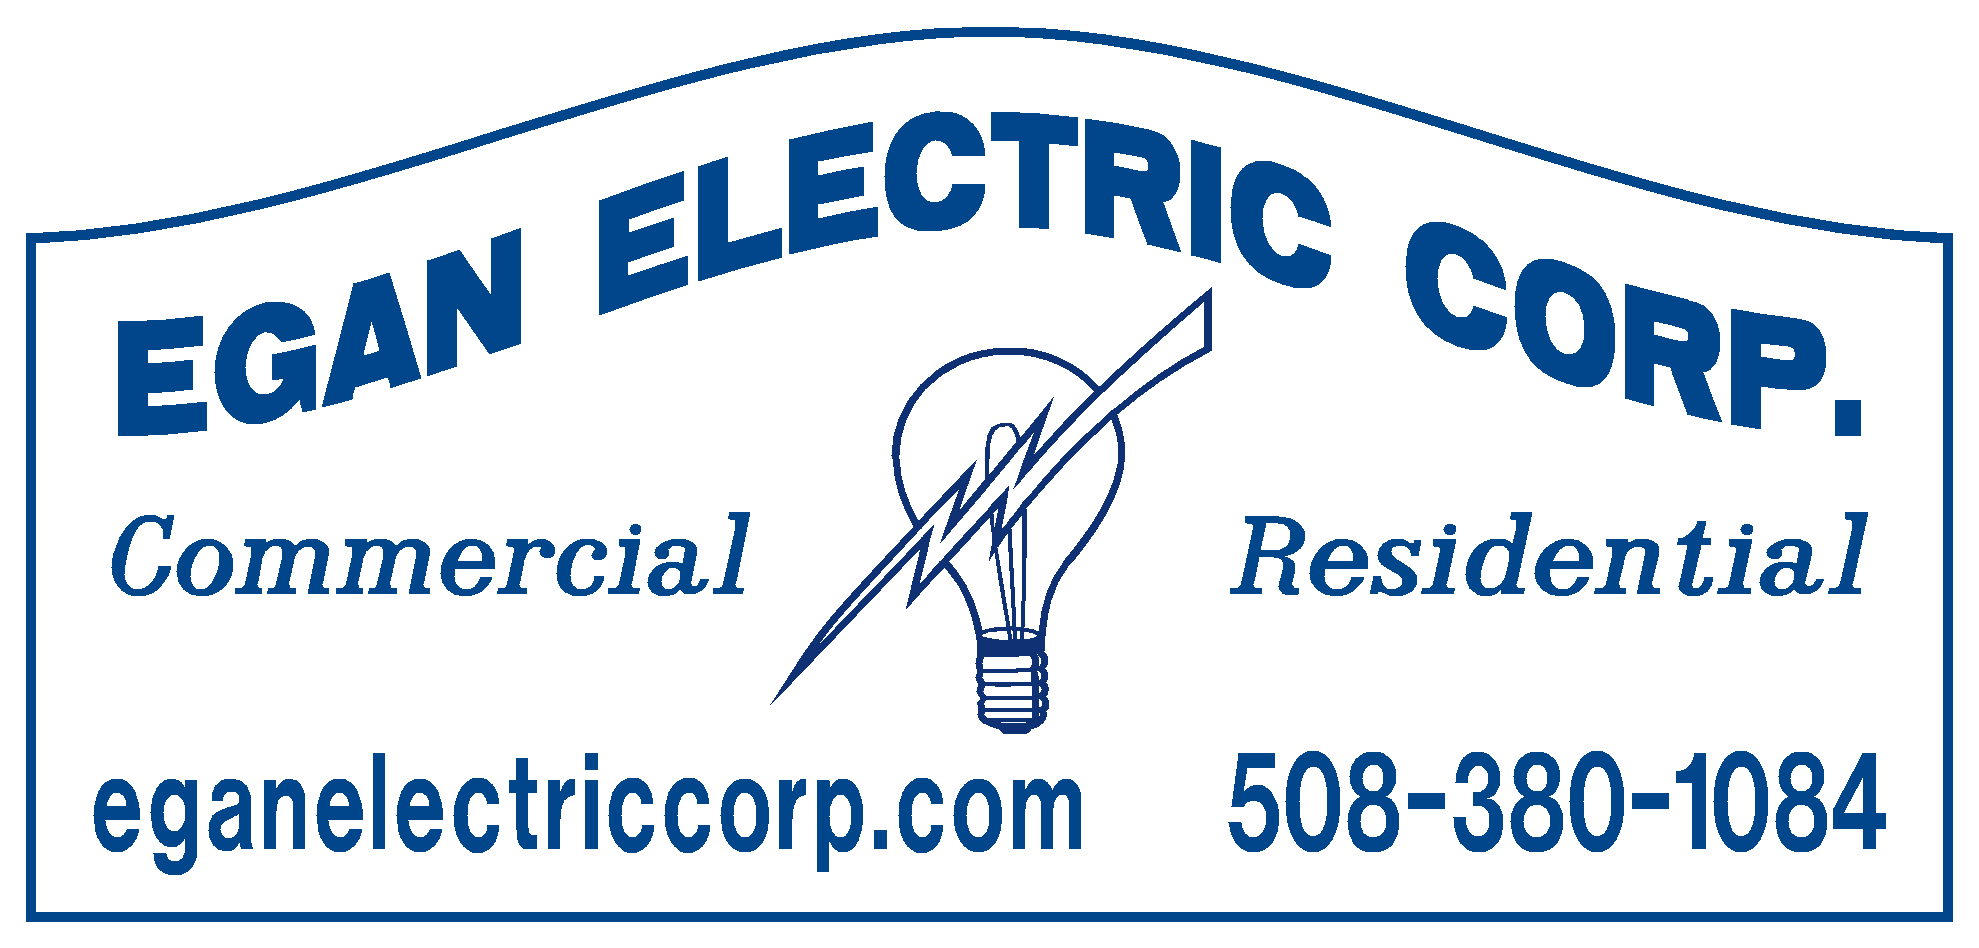 Egan Electric Corp. Logo